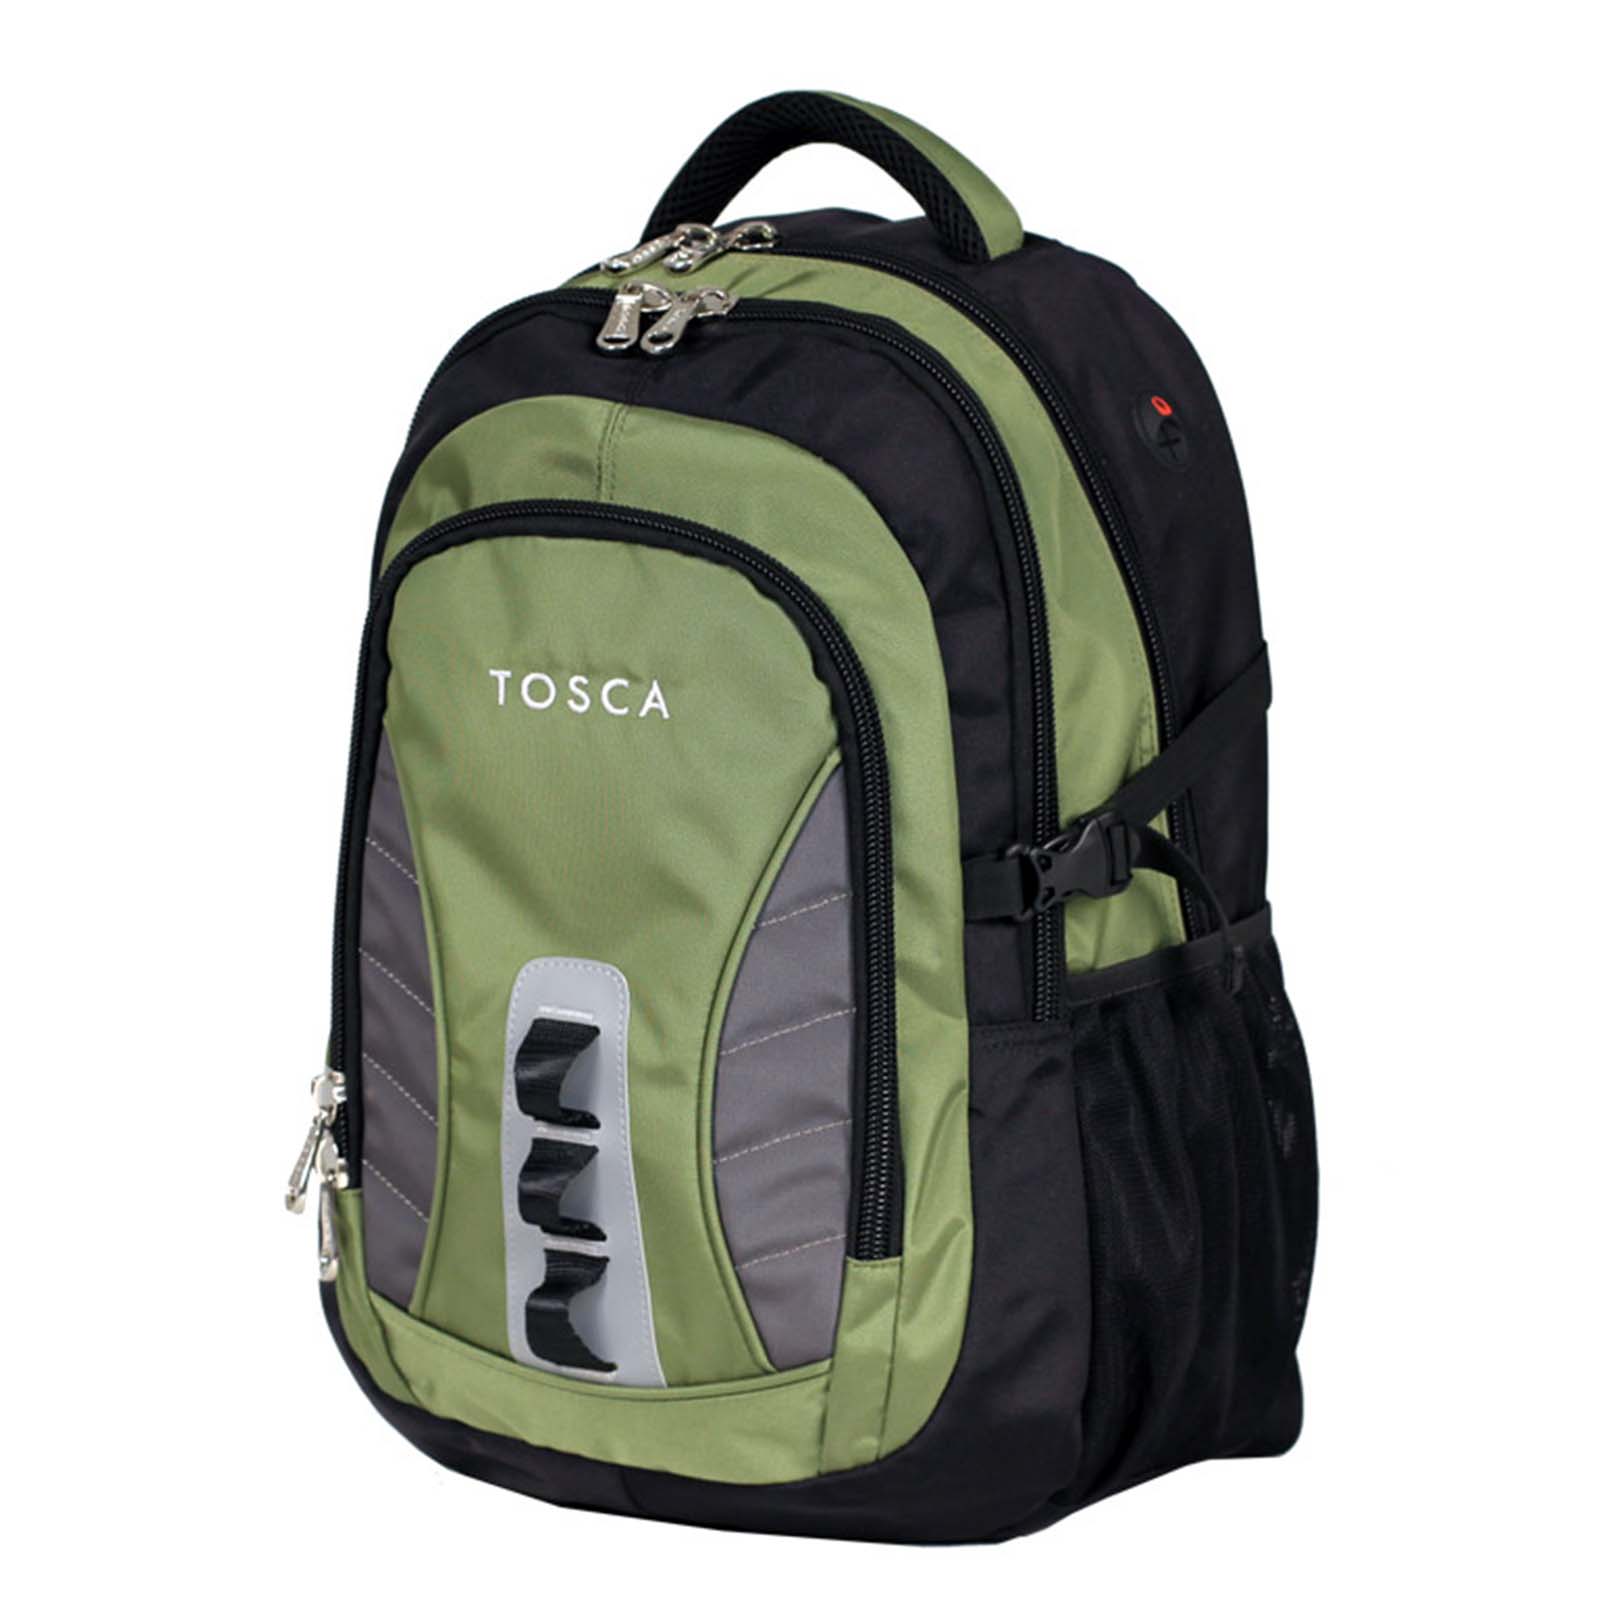 tosca-laptop-backpack-37l-khaki-grey-front